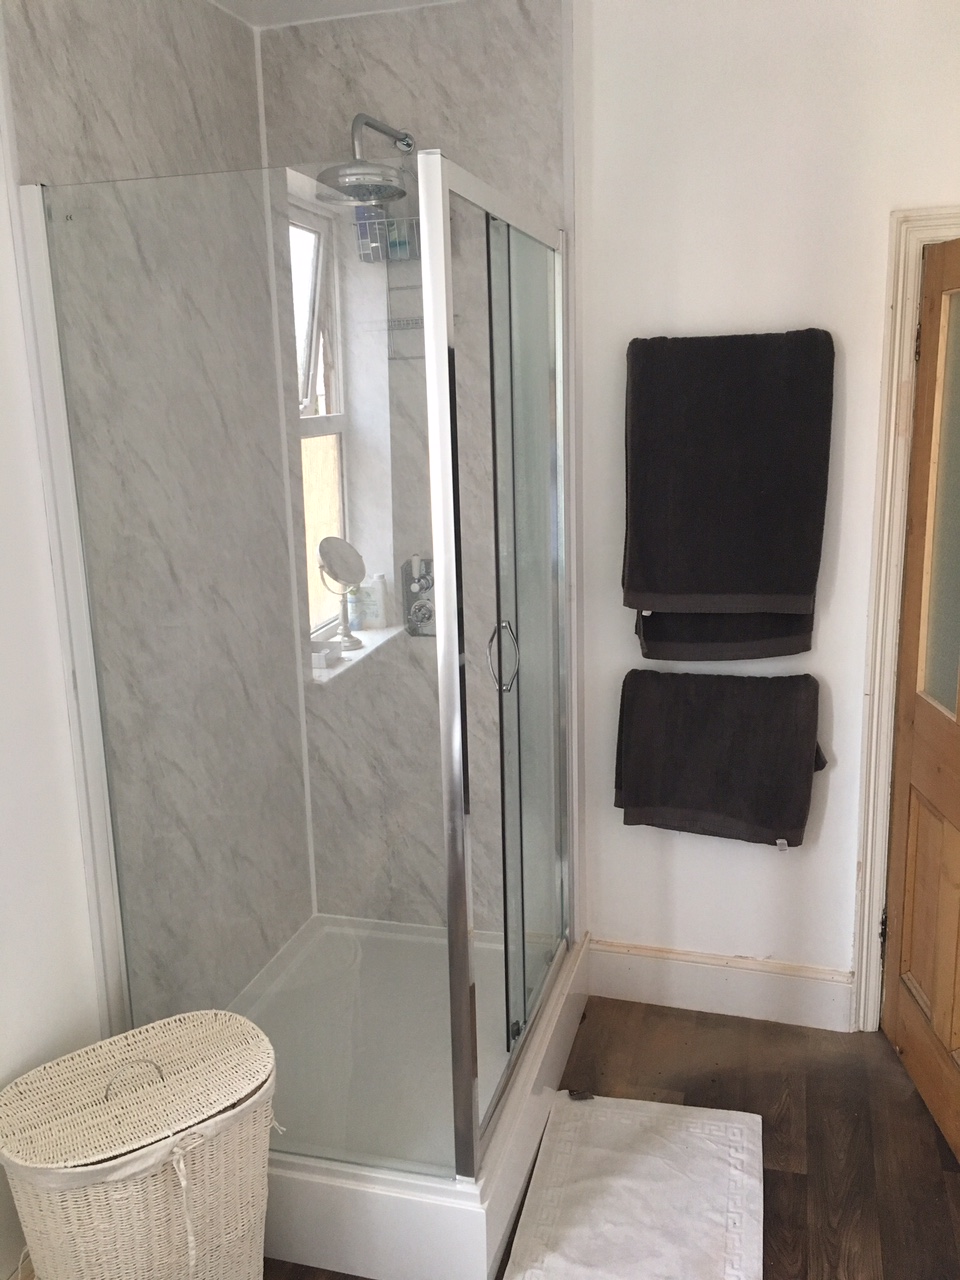 image1 - Customer's Shower Installation